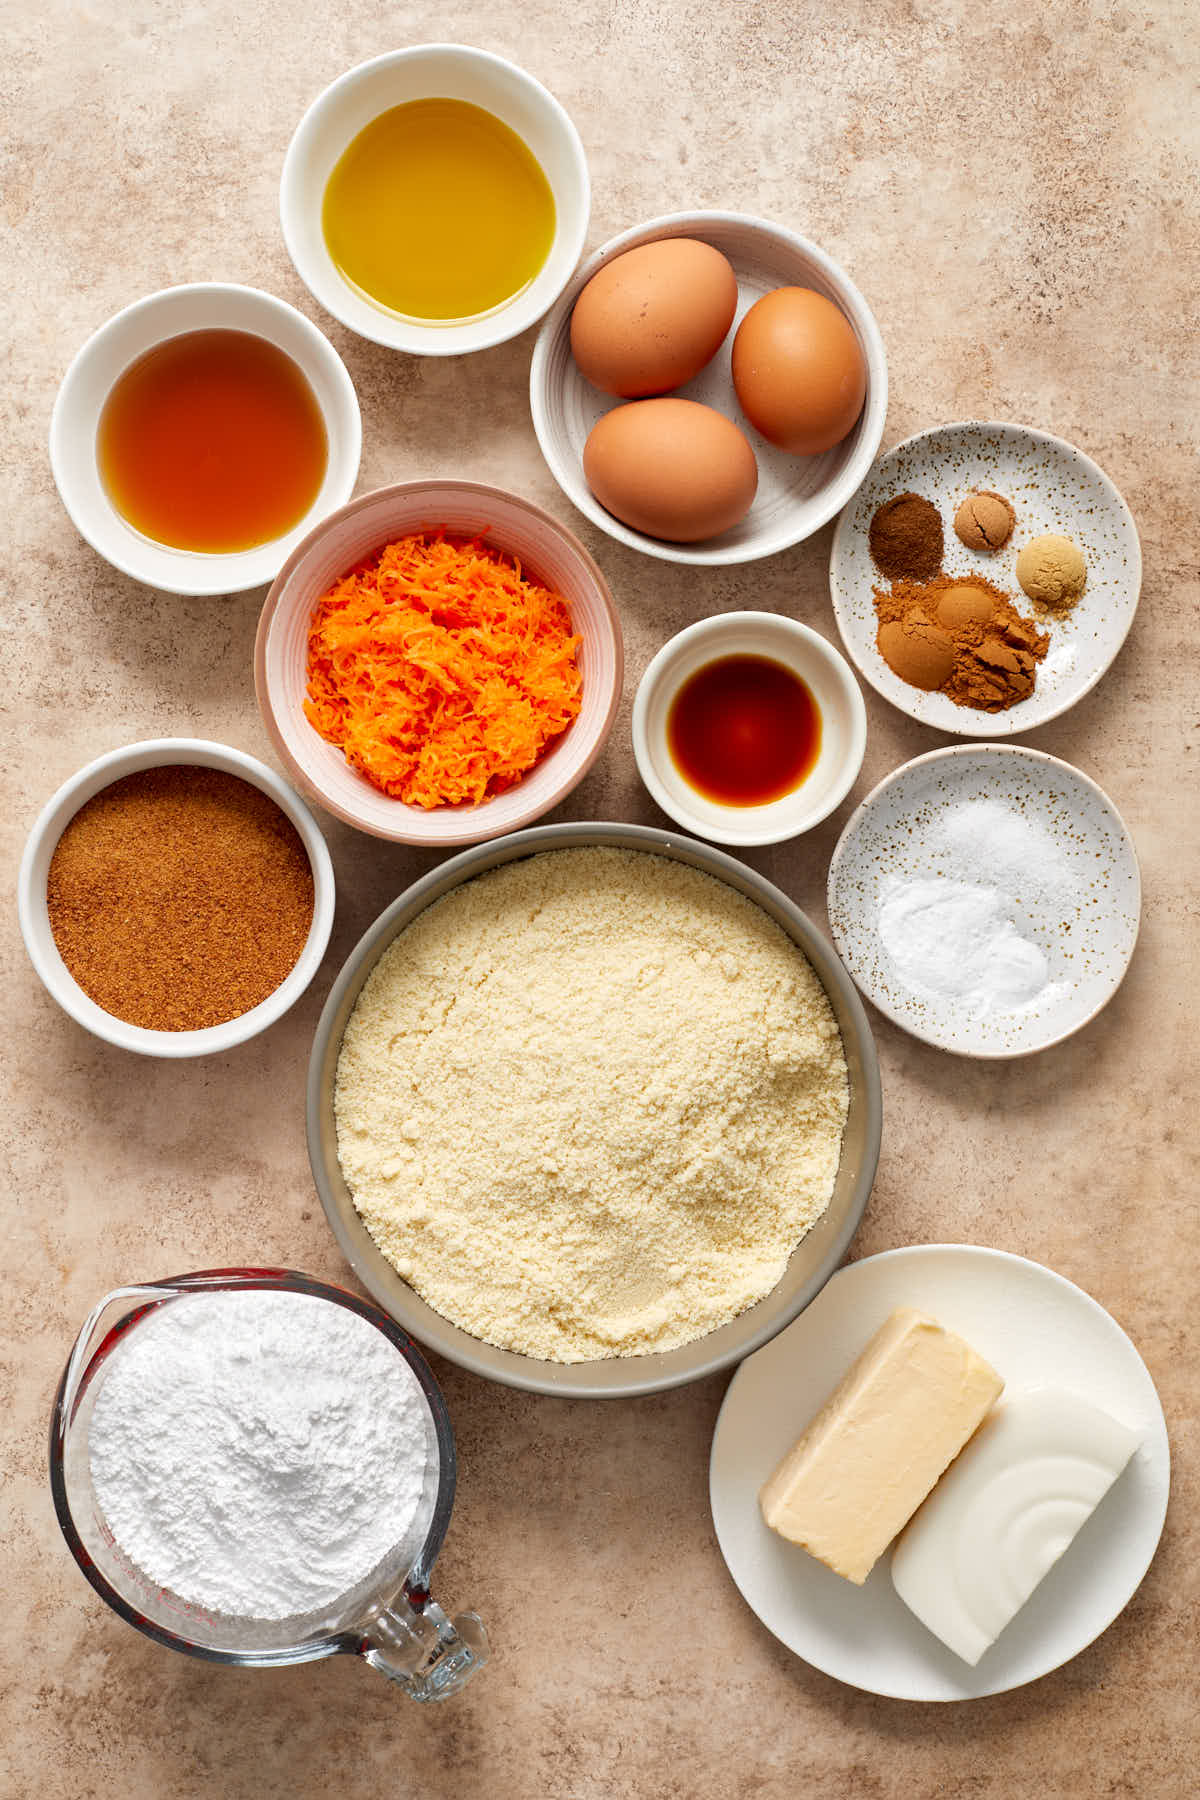 Ingredients to make almond flour carrot cake arranged in individual bowls.